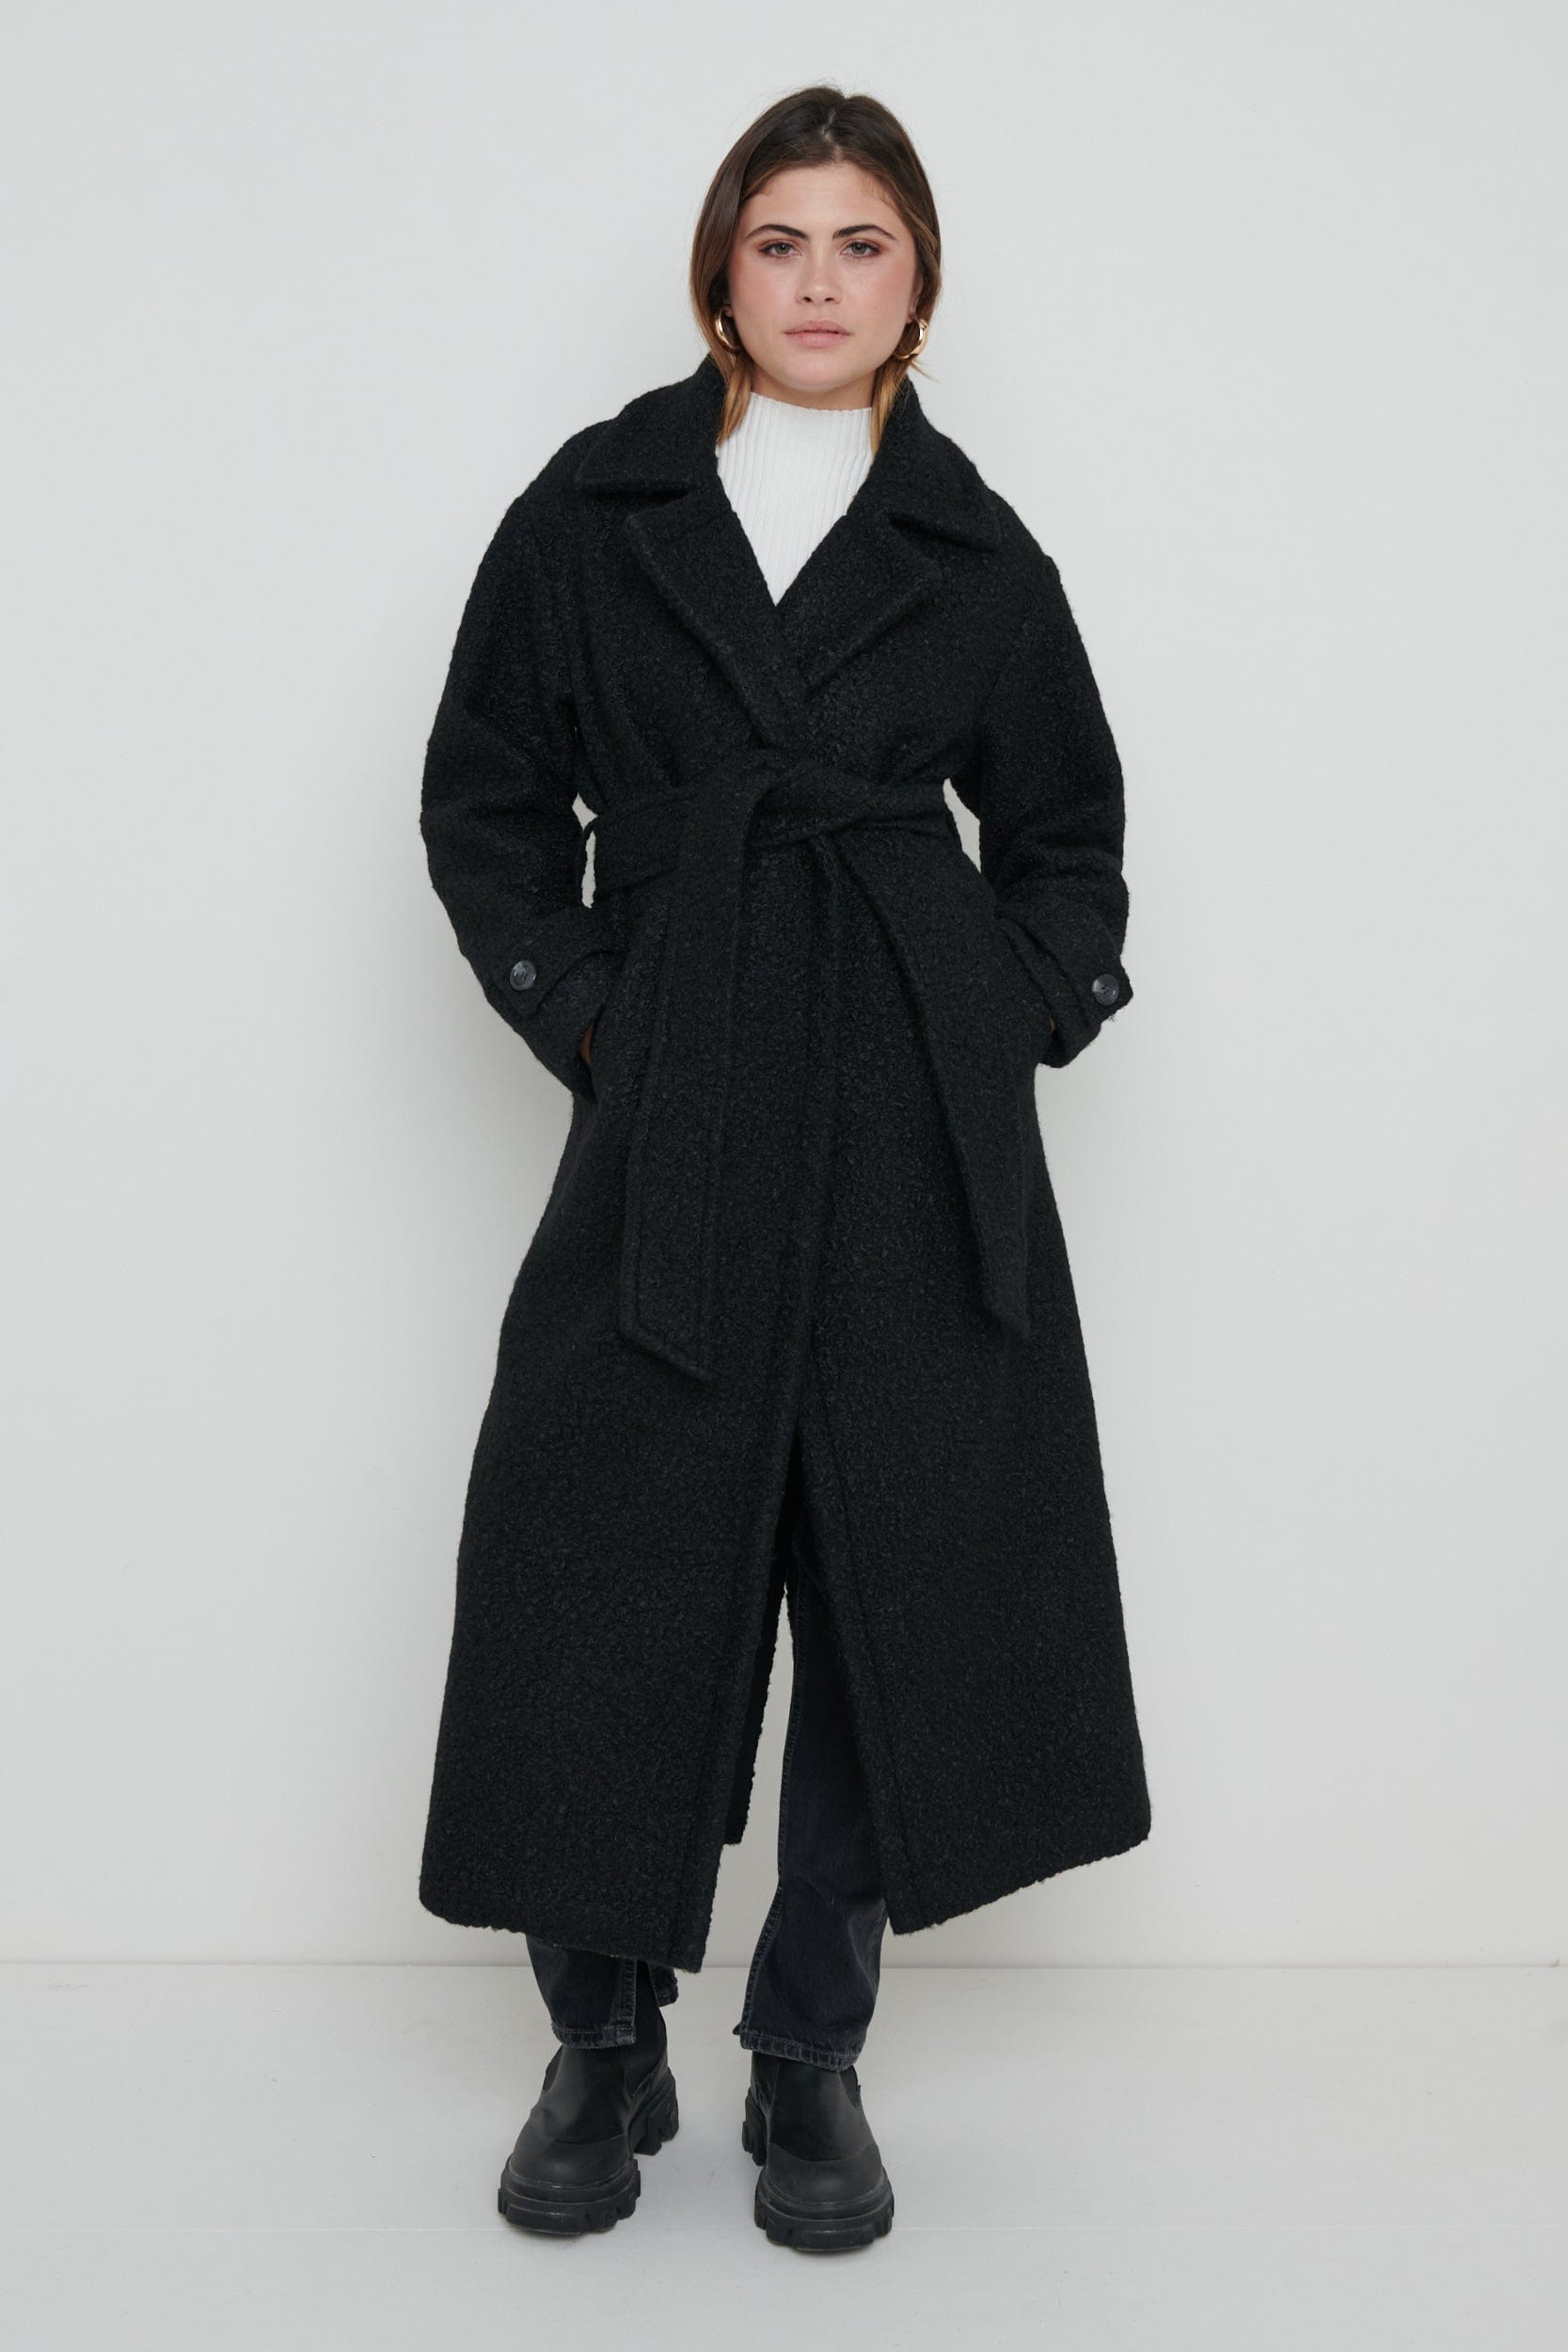 Grayson Boucle Oversized Coat - Black, L